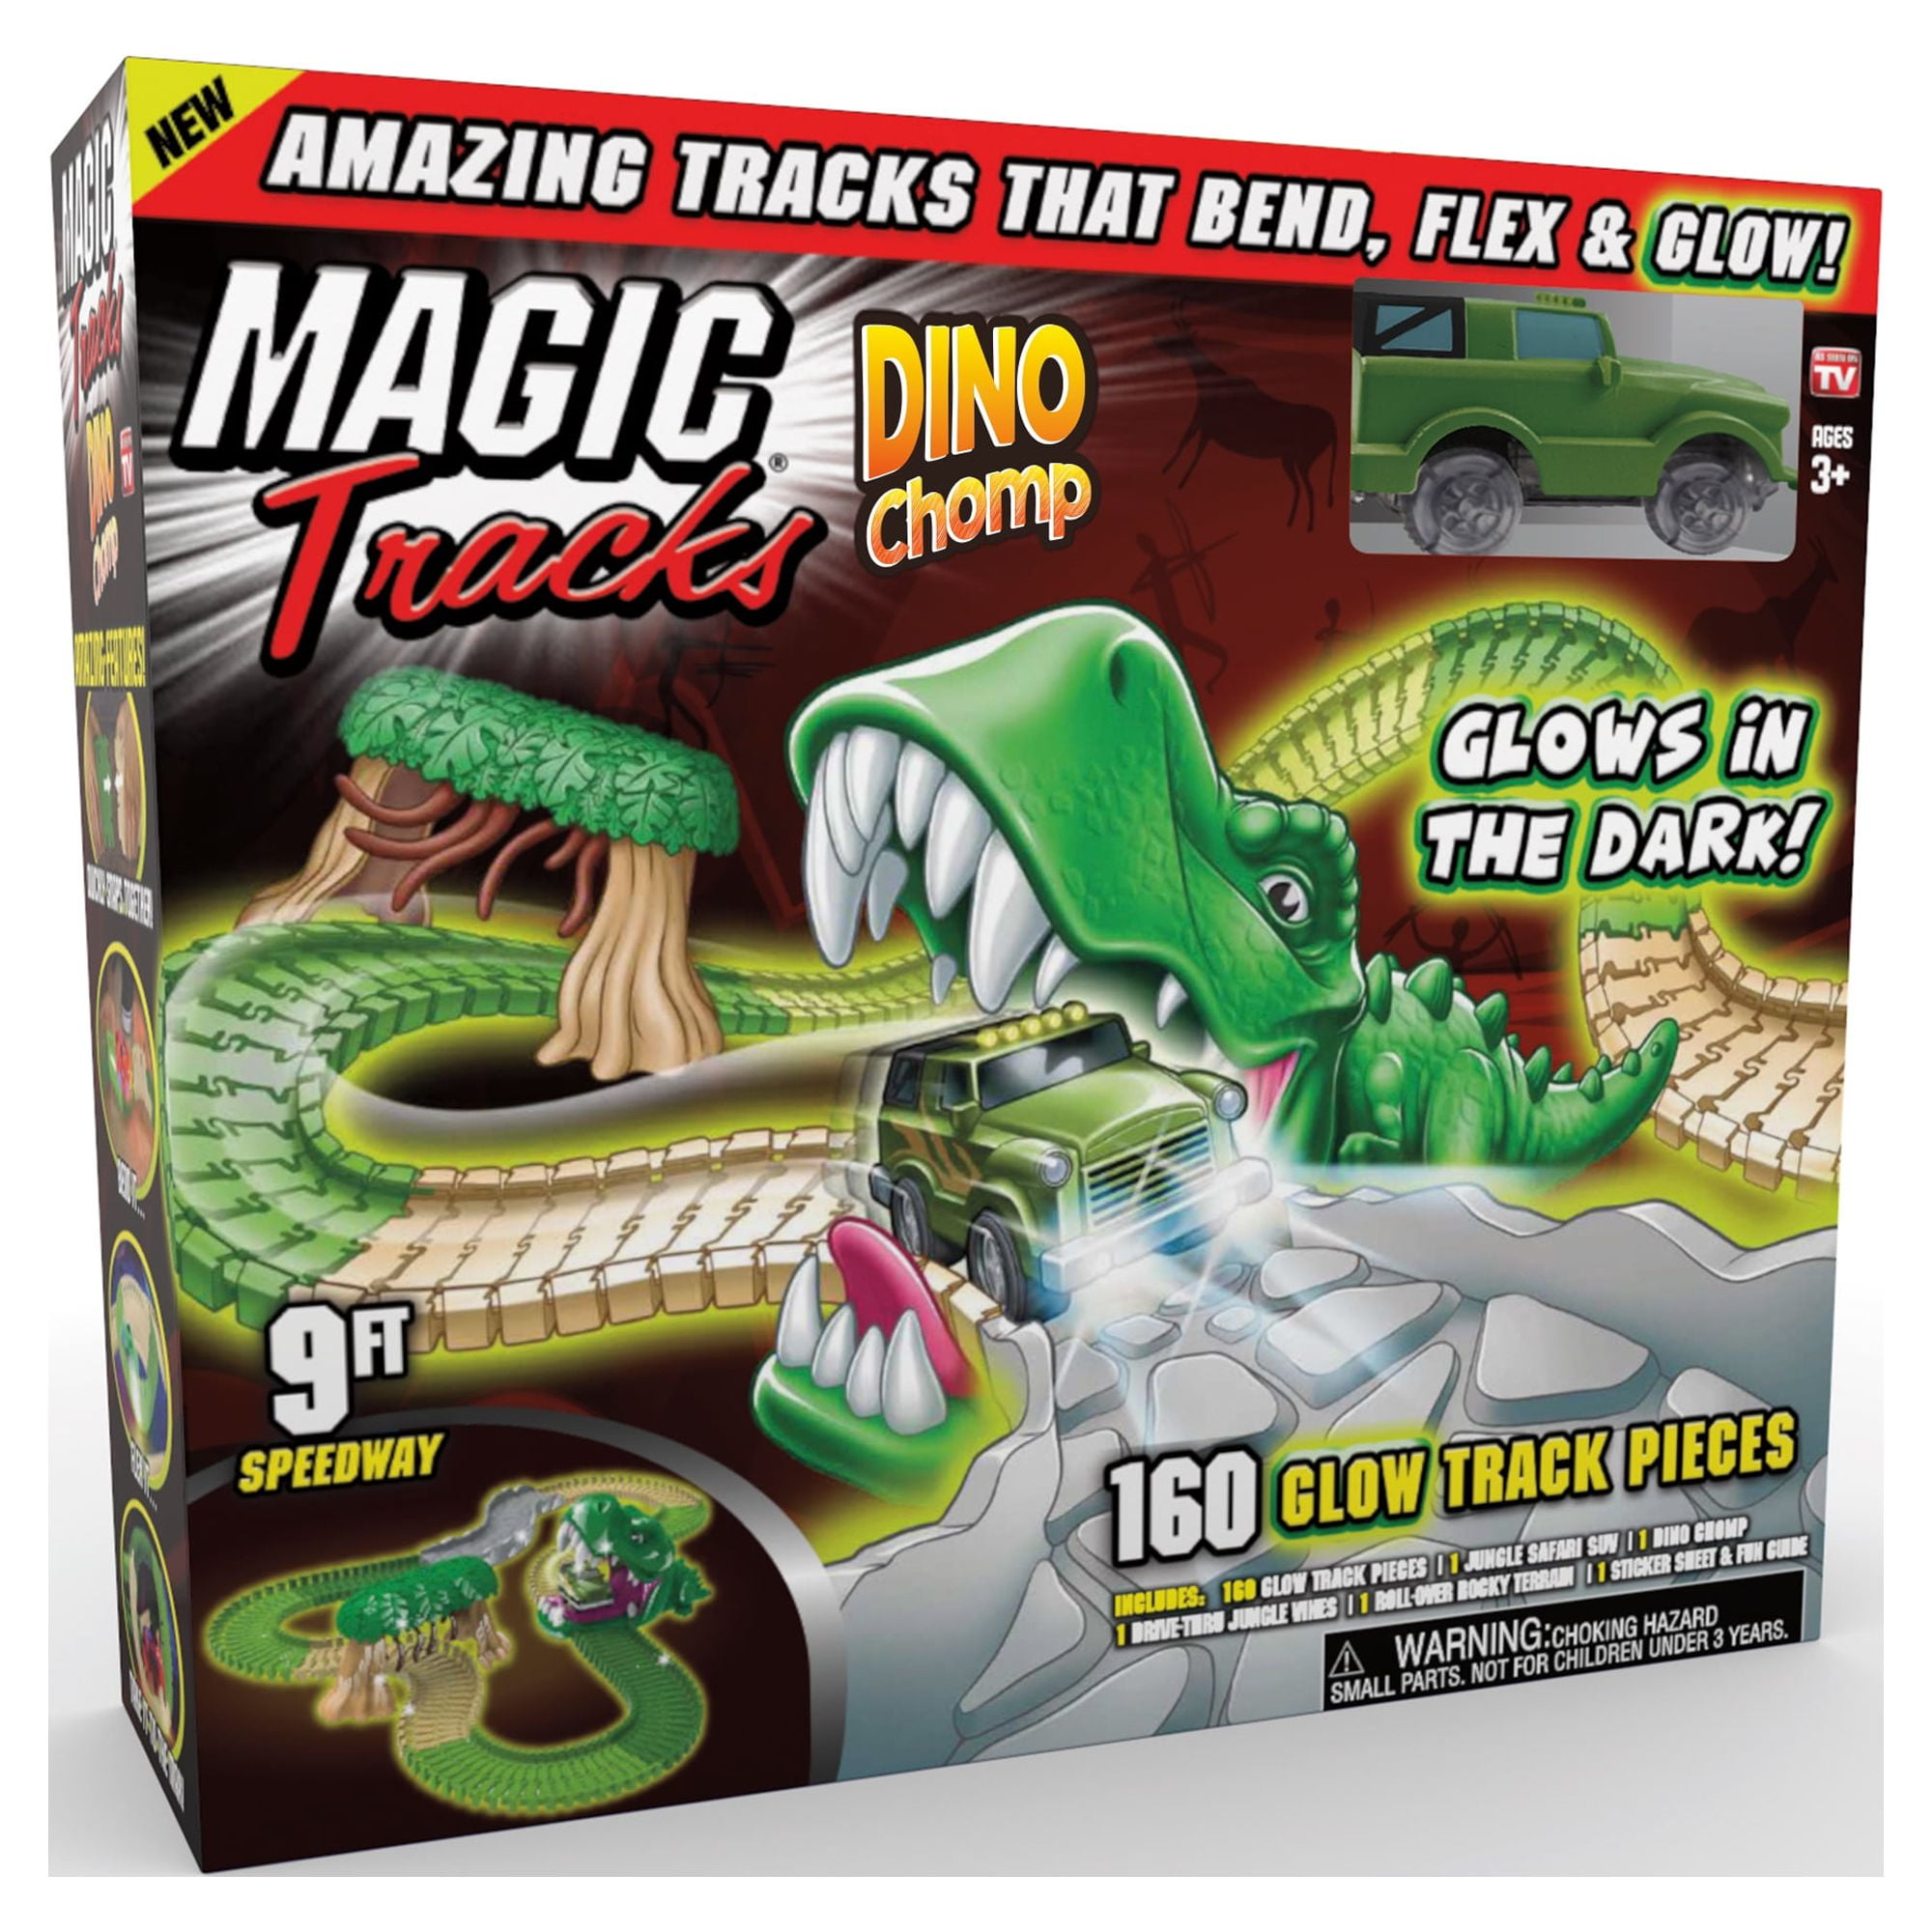 Magic Tracks Dino Chomp Toy Car And